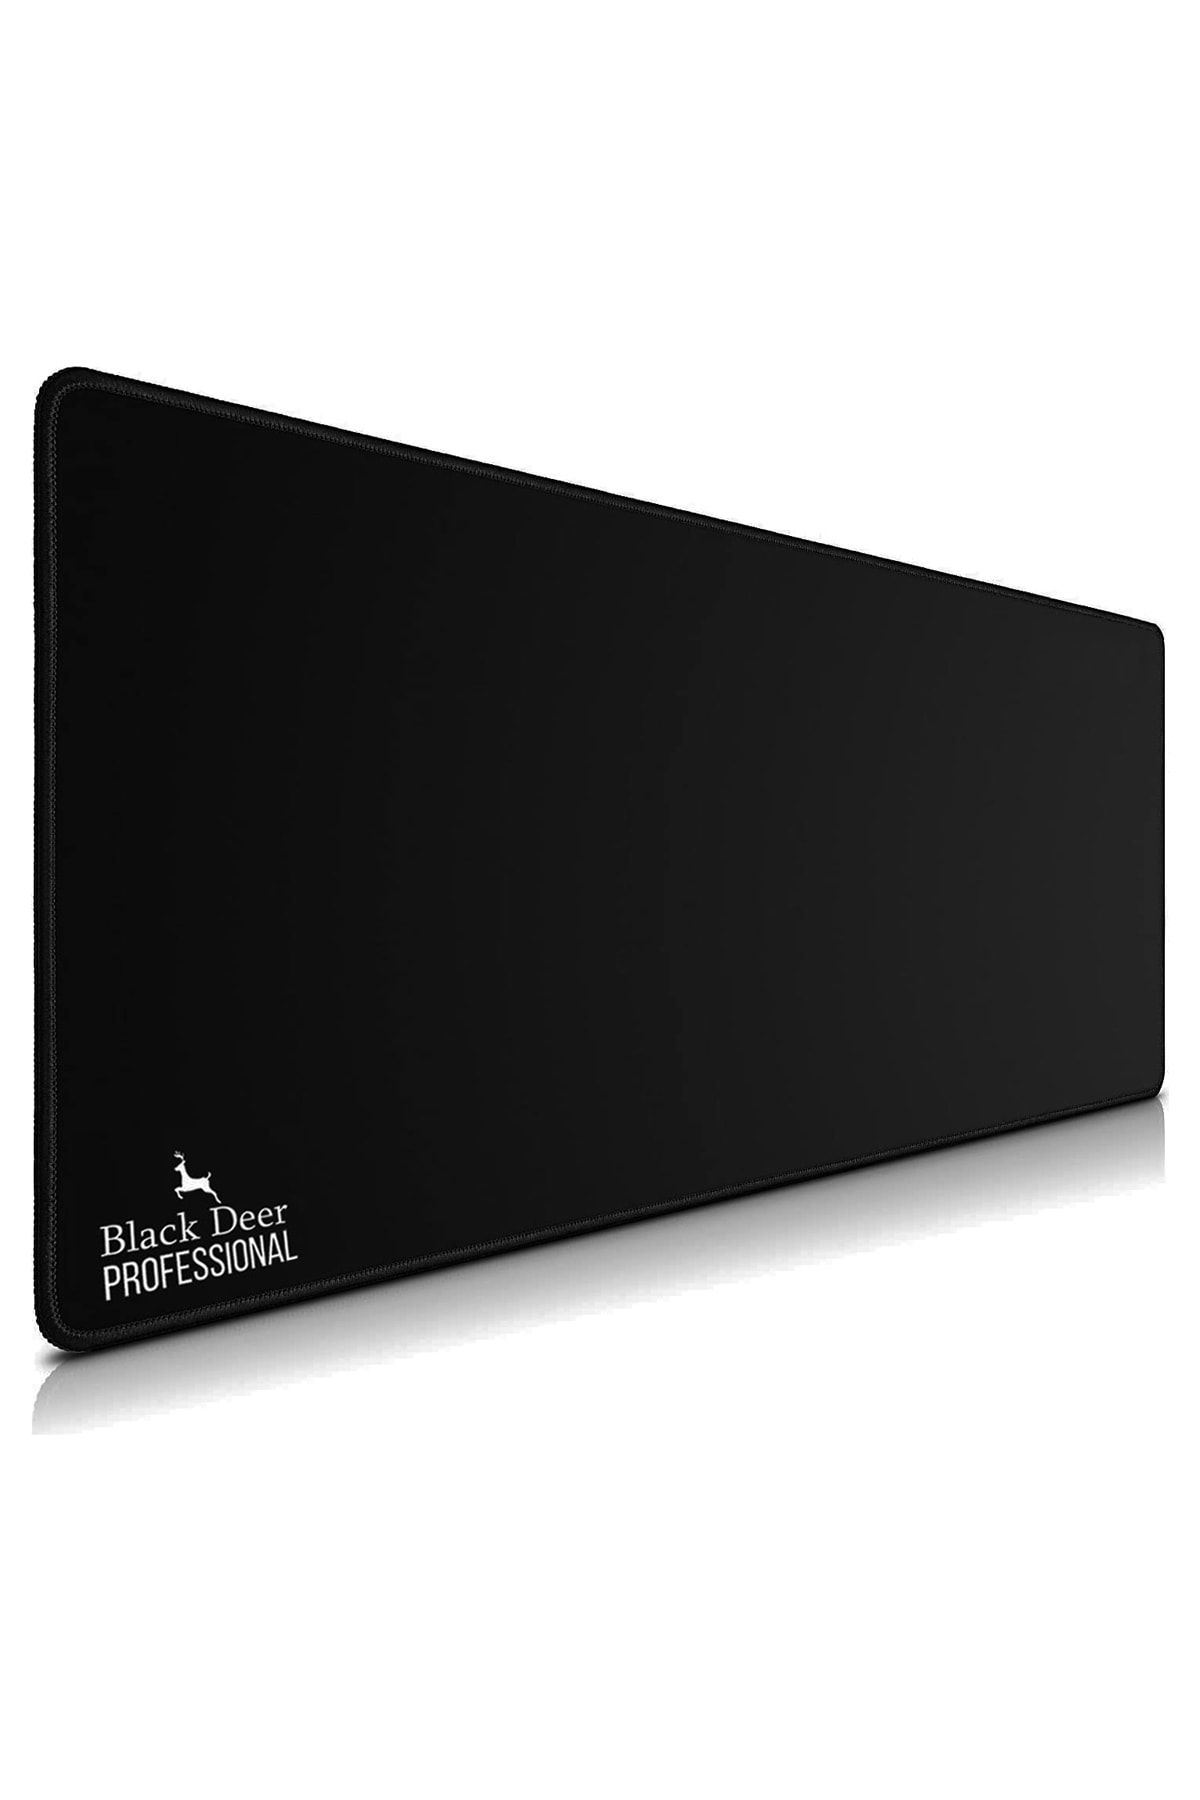 BLACK DEER Professional Siyah Büyük Boy Gaming Mouse Pad 70x30 Cm